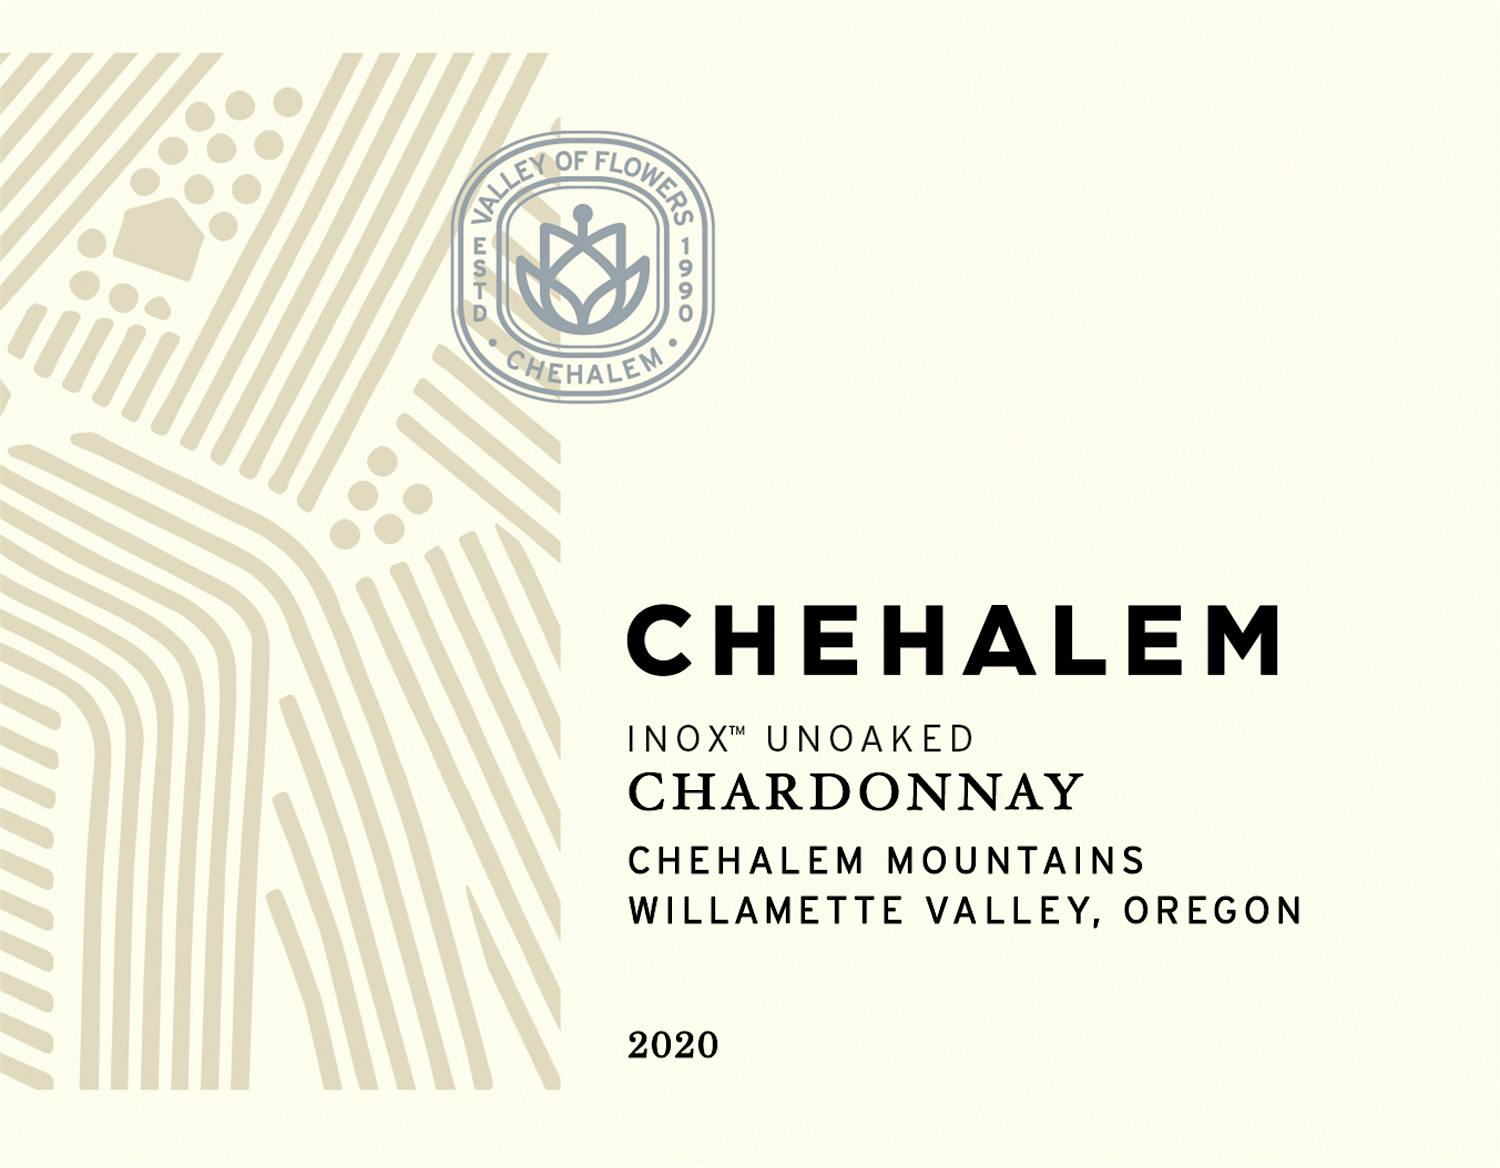 Label for Chehalem